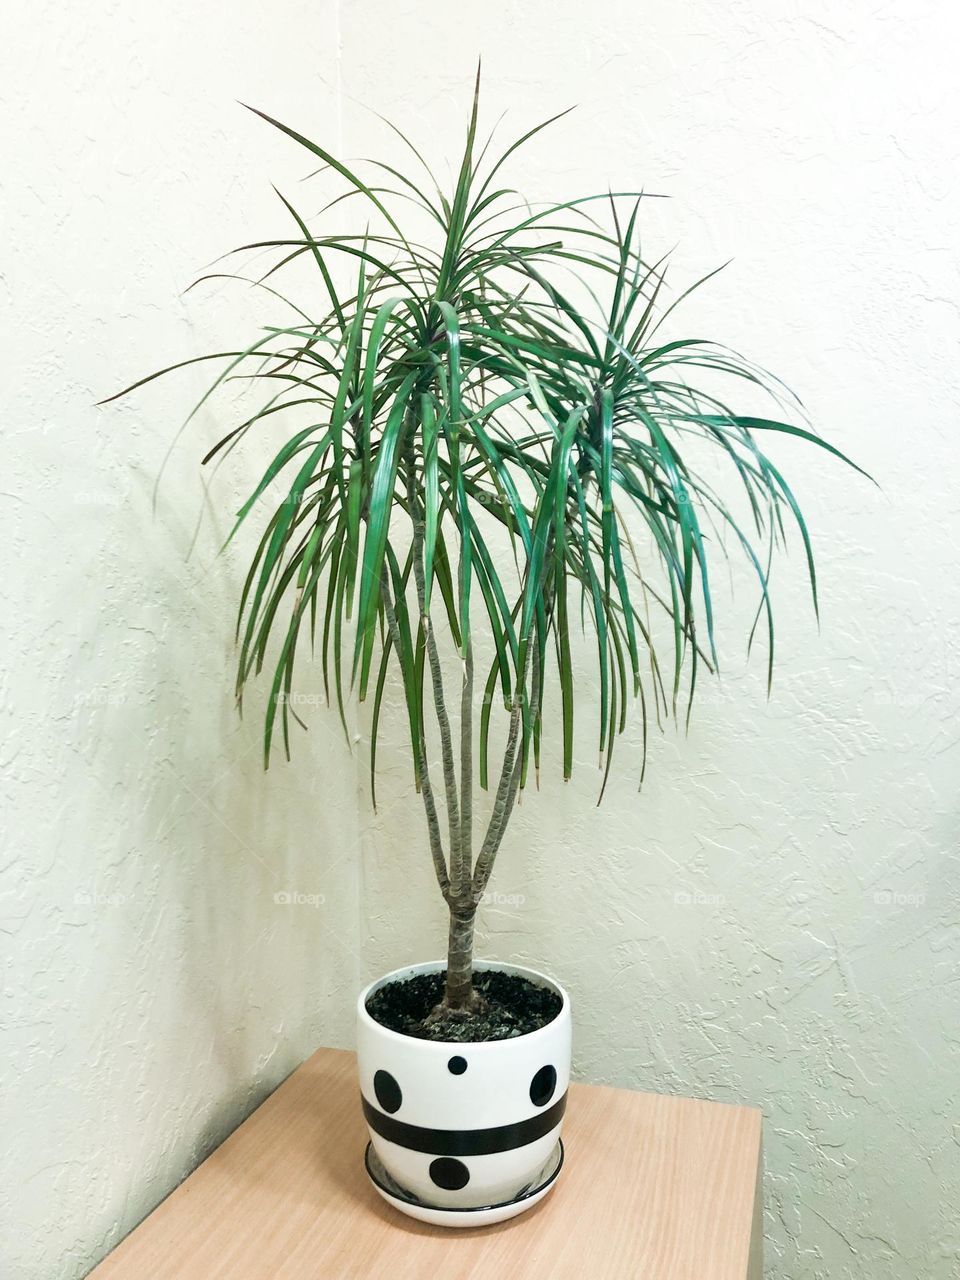 Green plant in white pot